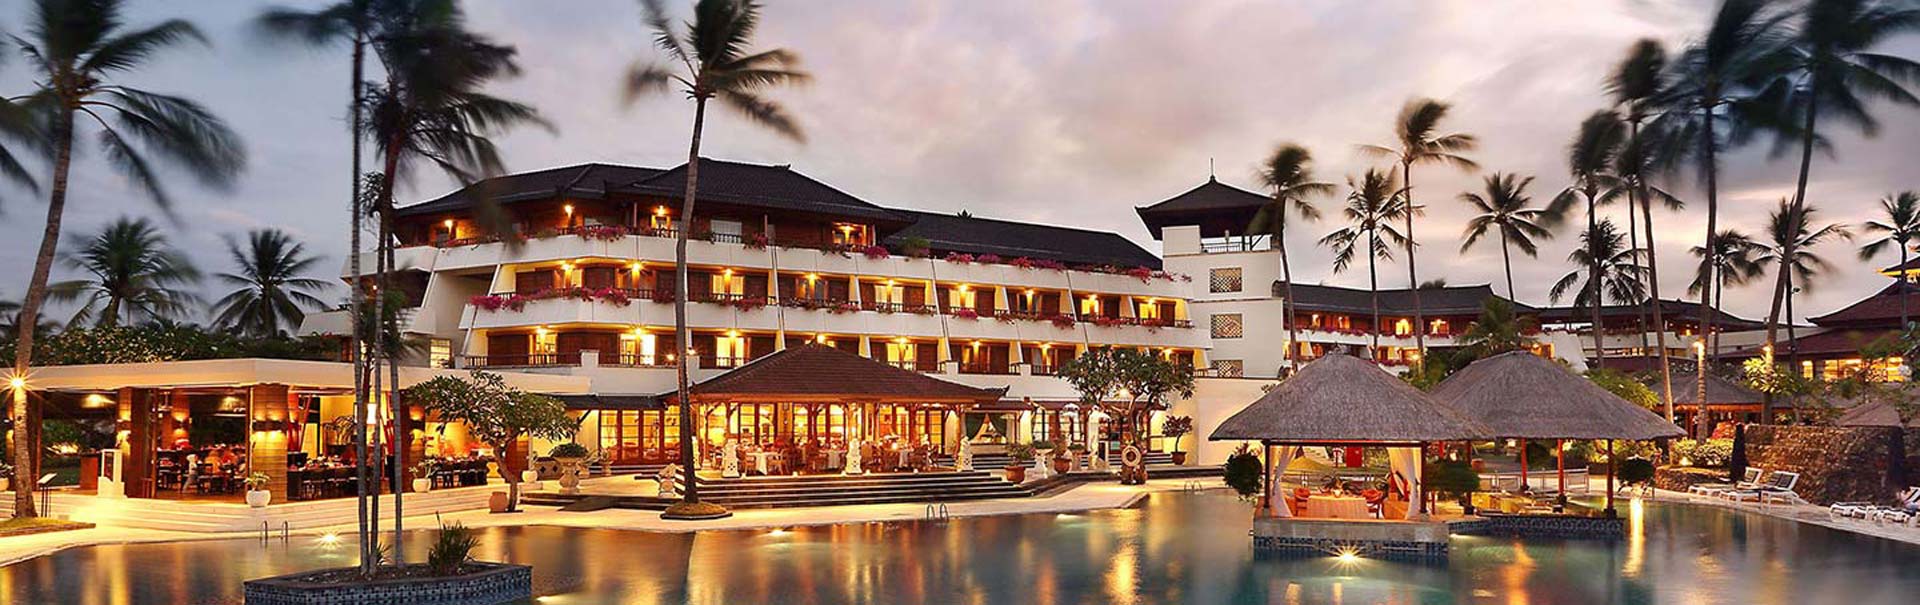 5 Days 4 Nights Romantic Bali With Nusa Dua Beach Hotel - 